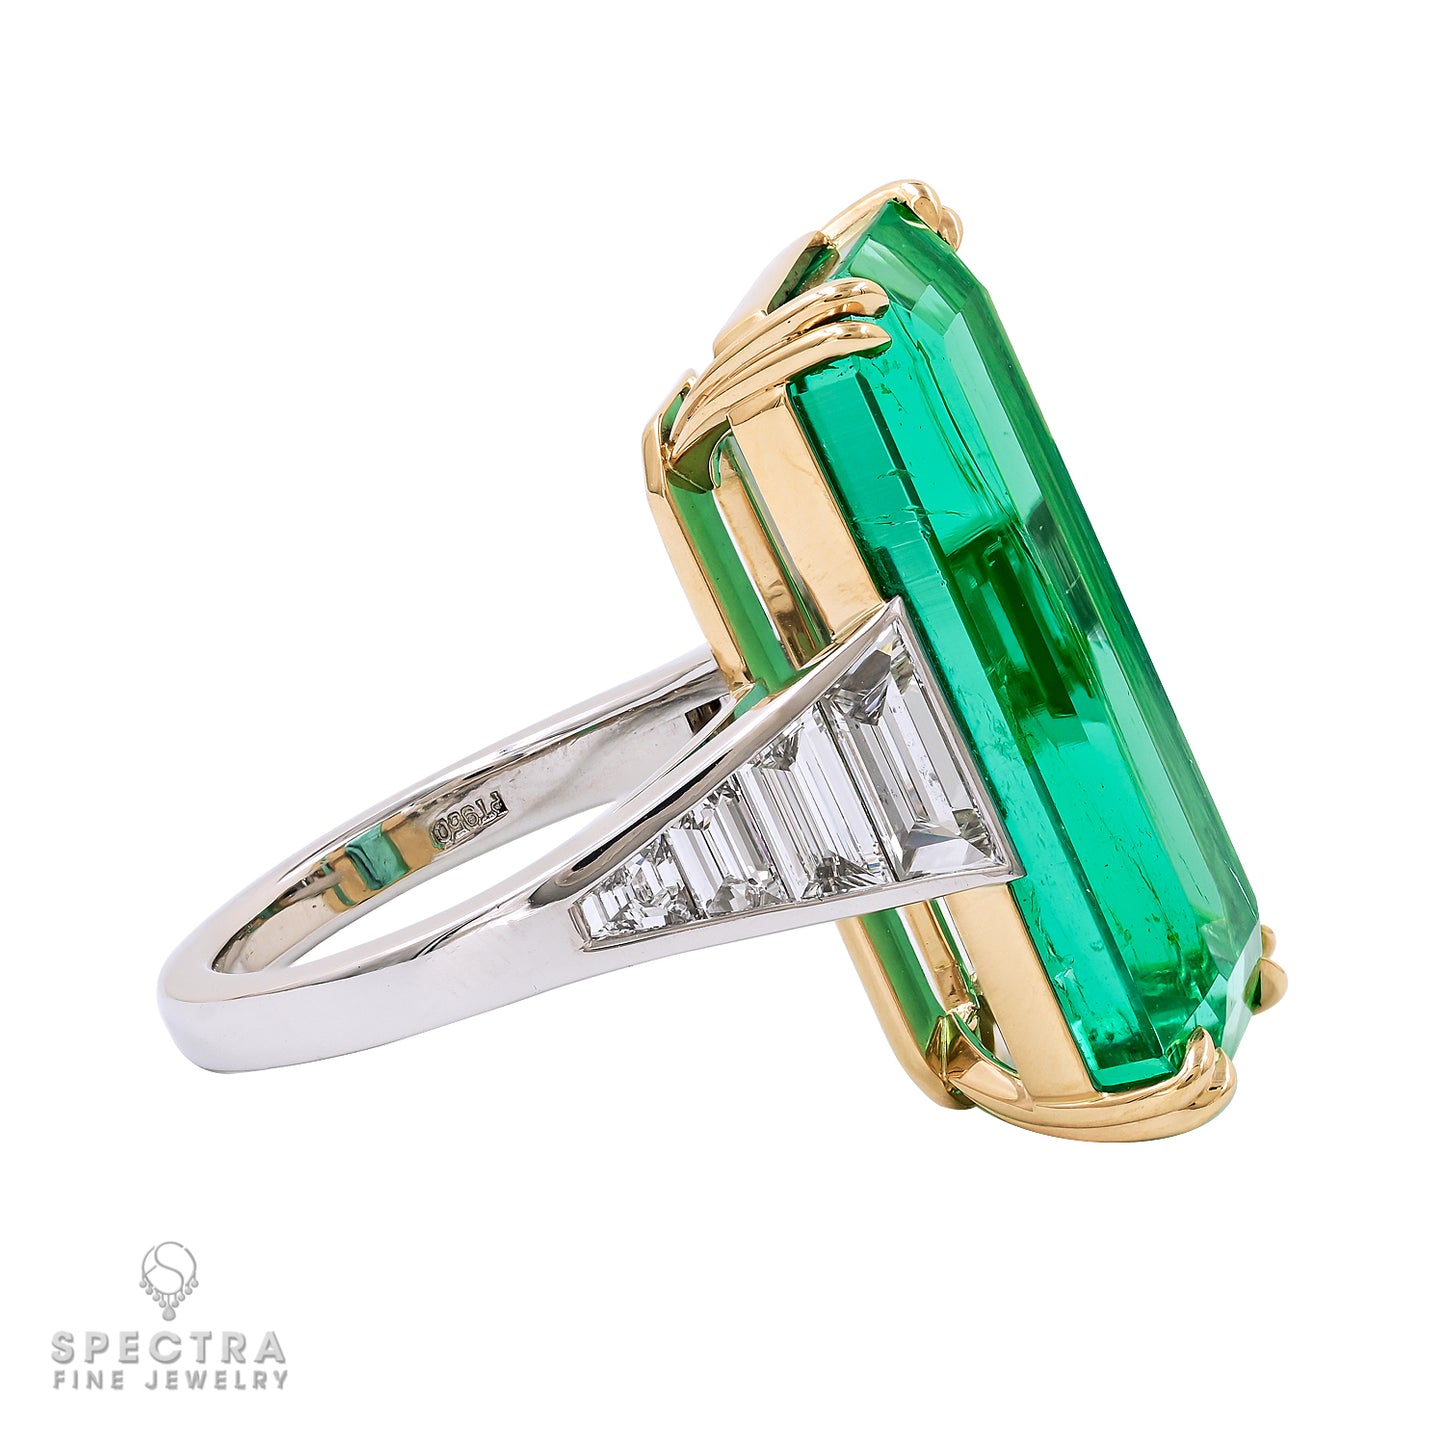 Spectra Fine Jewelry 15.91 ct. Colombian Emerald Diamond Ring